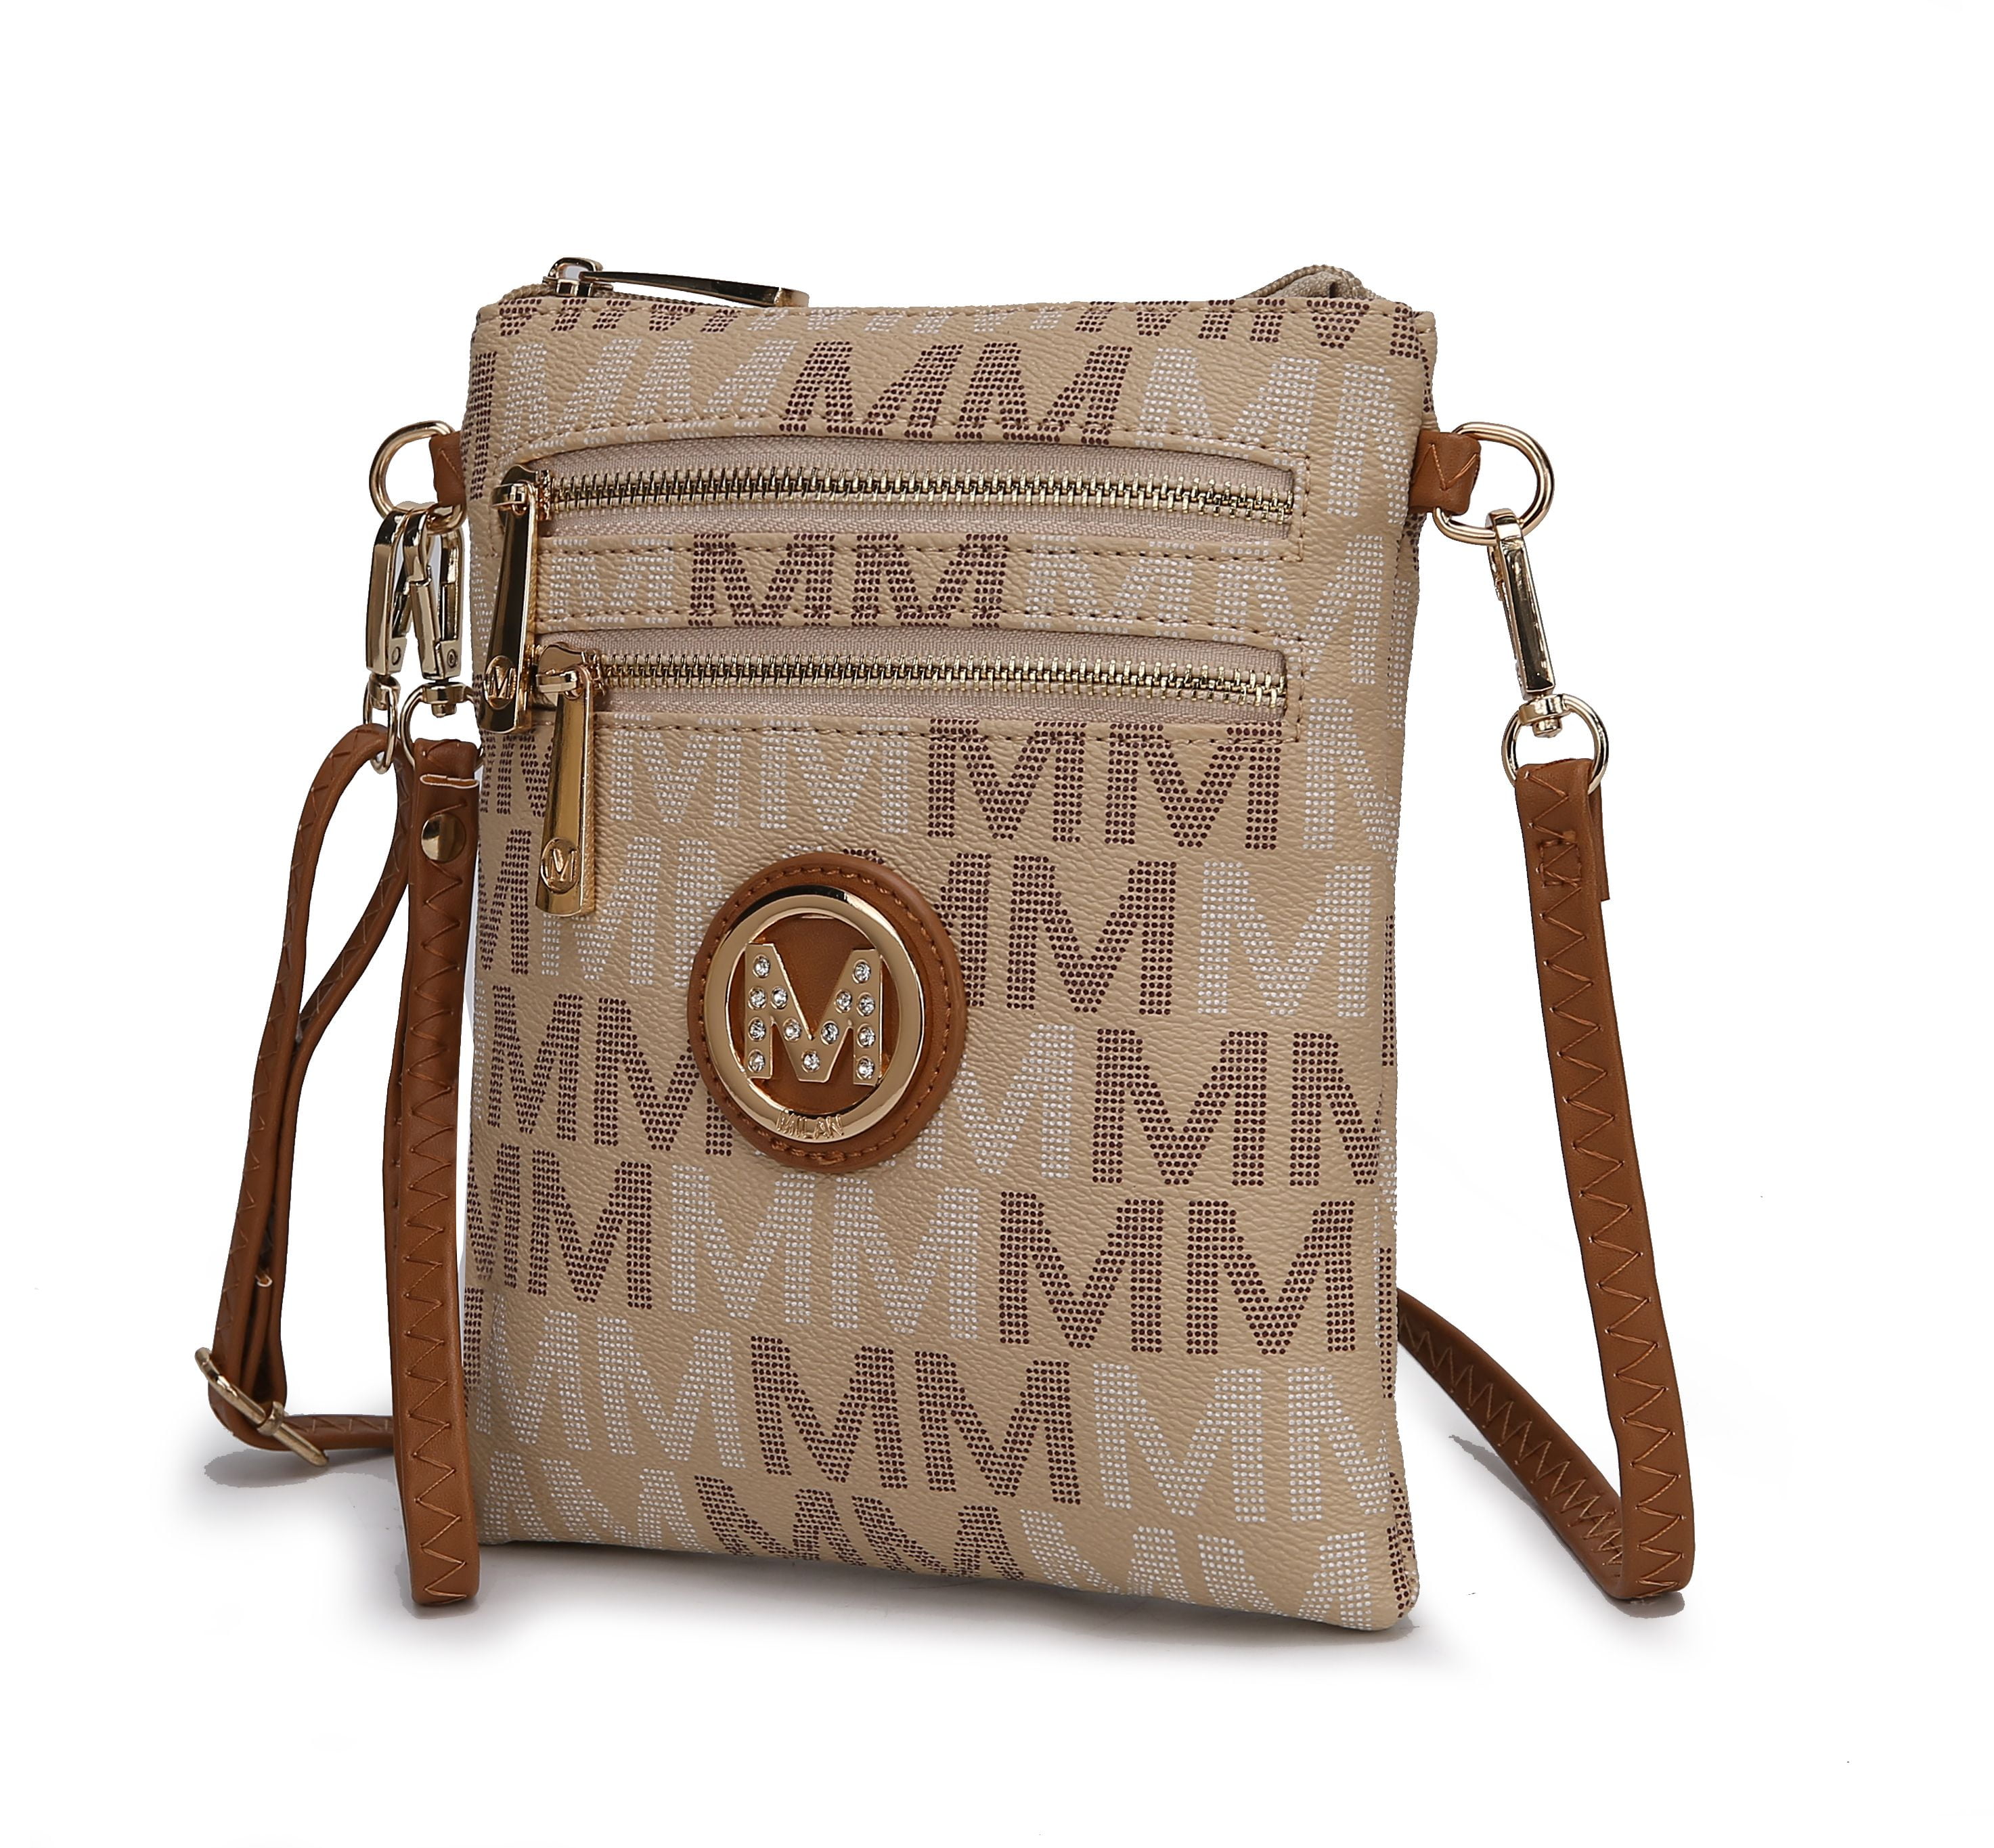 Milan Collection M Signature Women's Crossbody Handbag